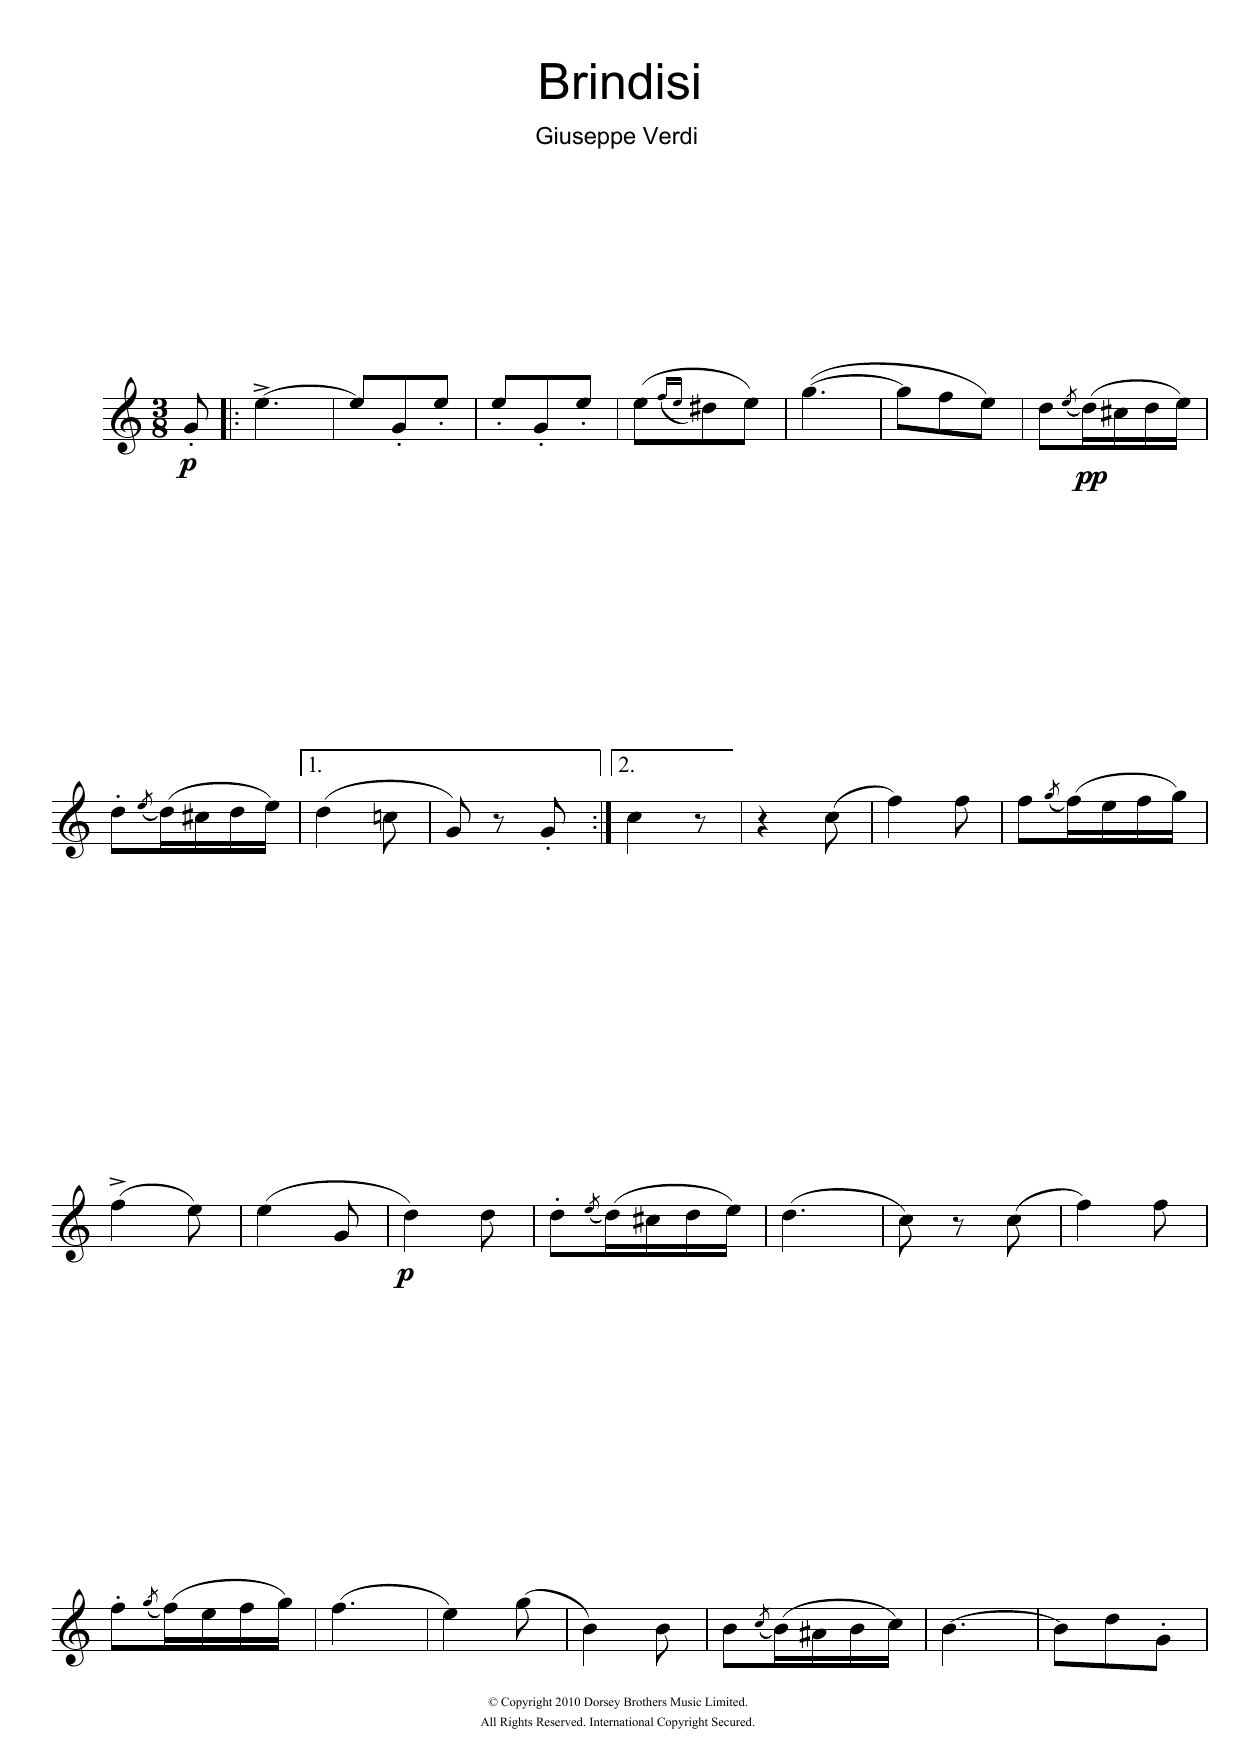 Giuseppe Verdi Brindisi (from La Traviata) Sheet Music Notes & Chords for Alto Saxophone - Download or Print PDF